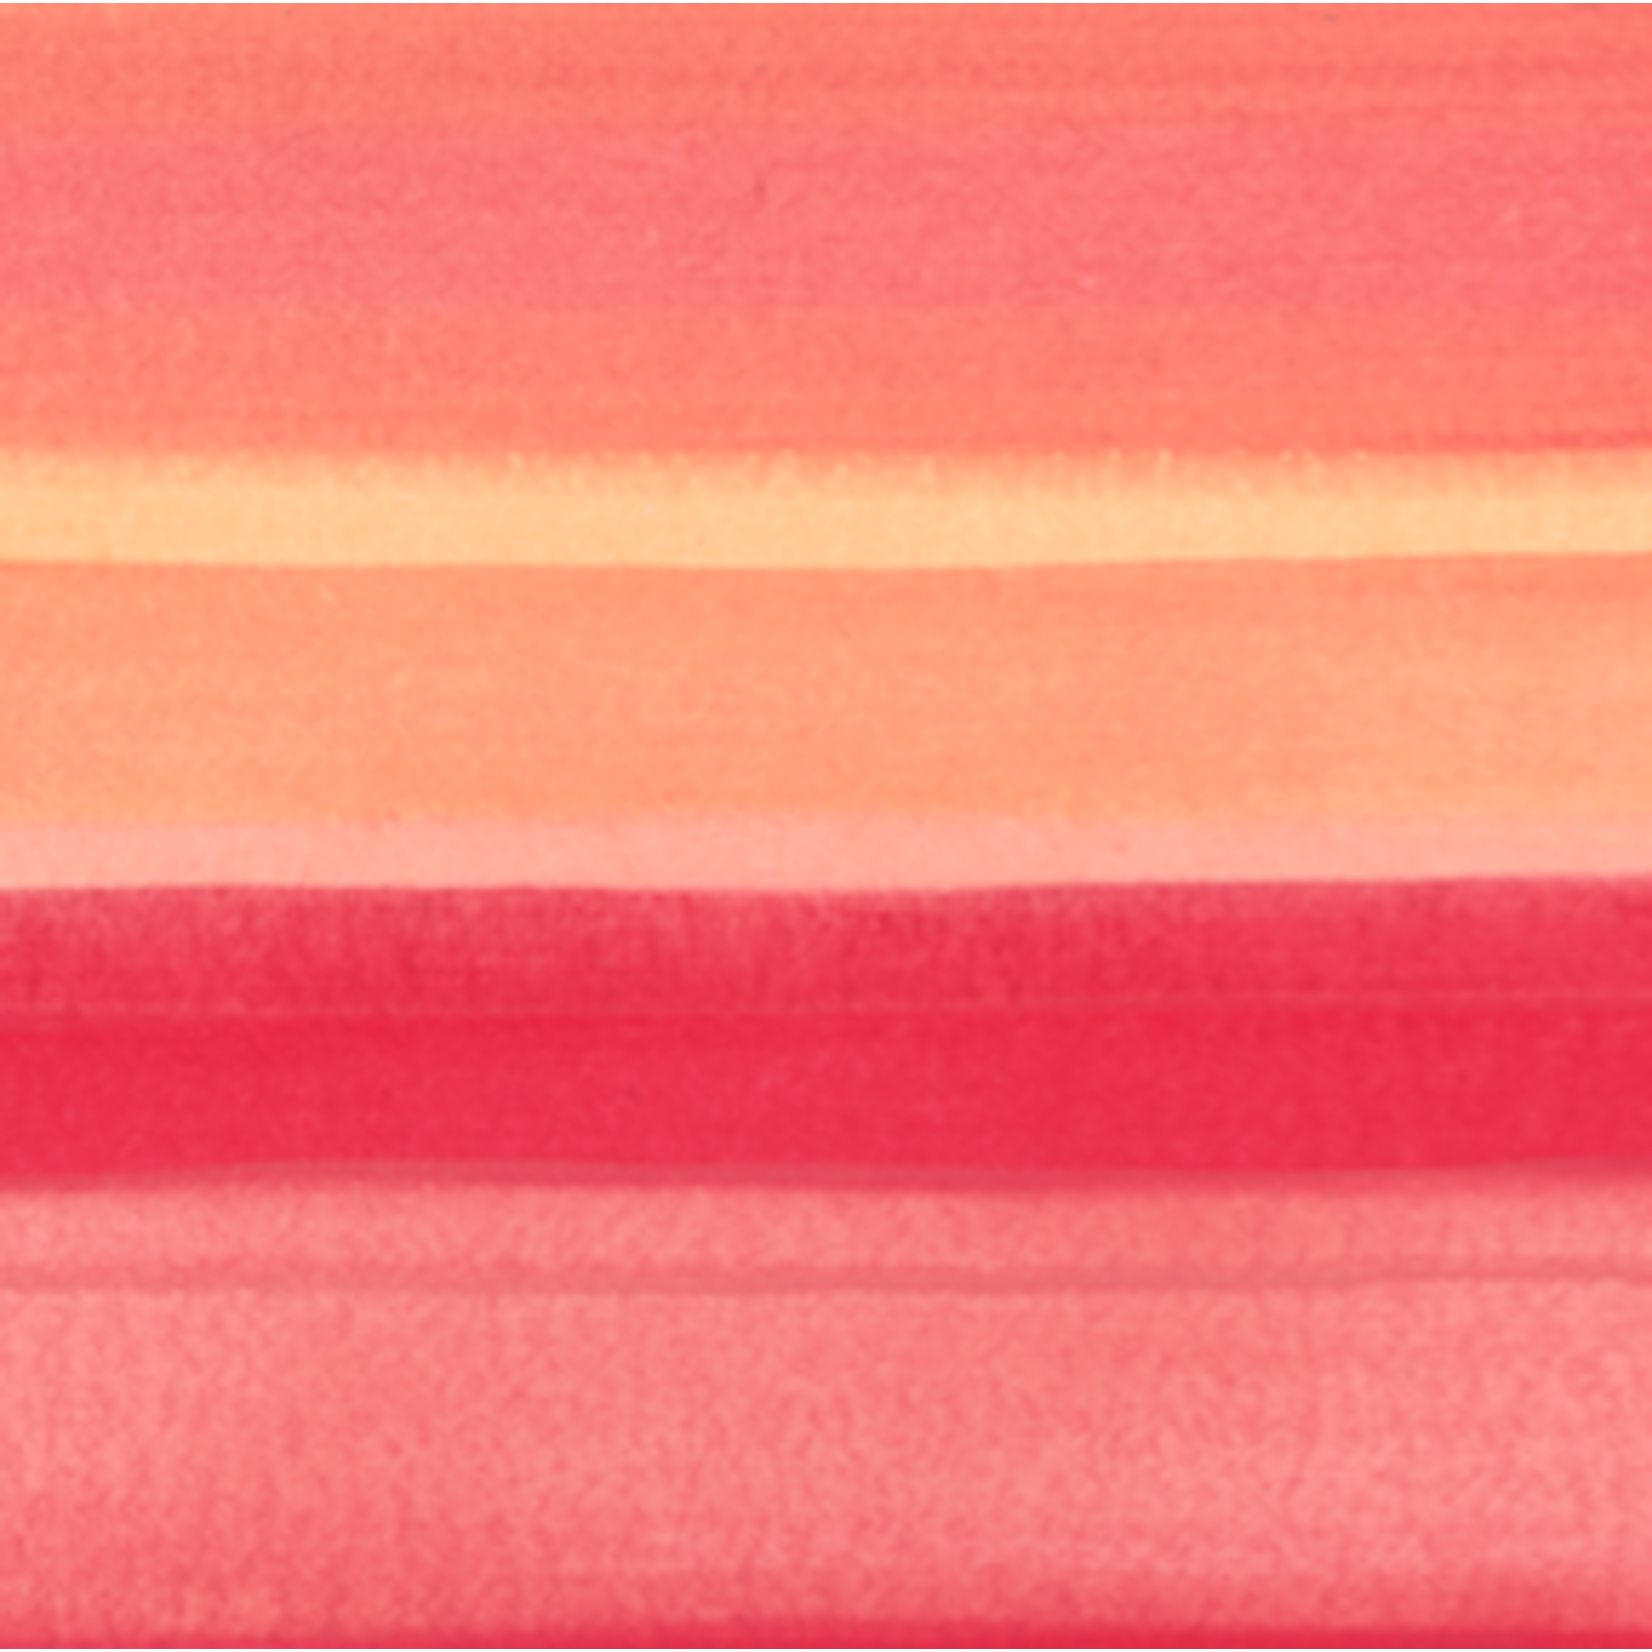 Framed Print on Rag Paper: Seascape II by Seiko